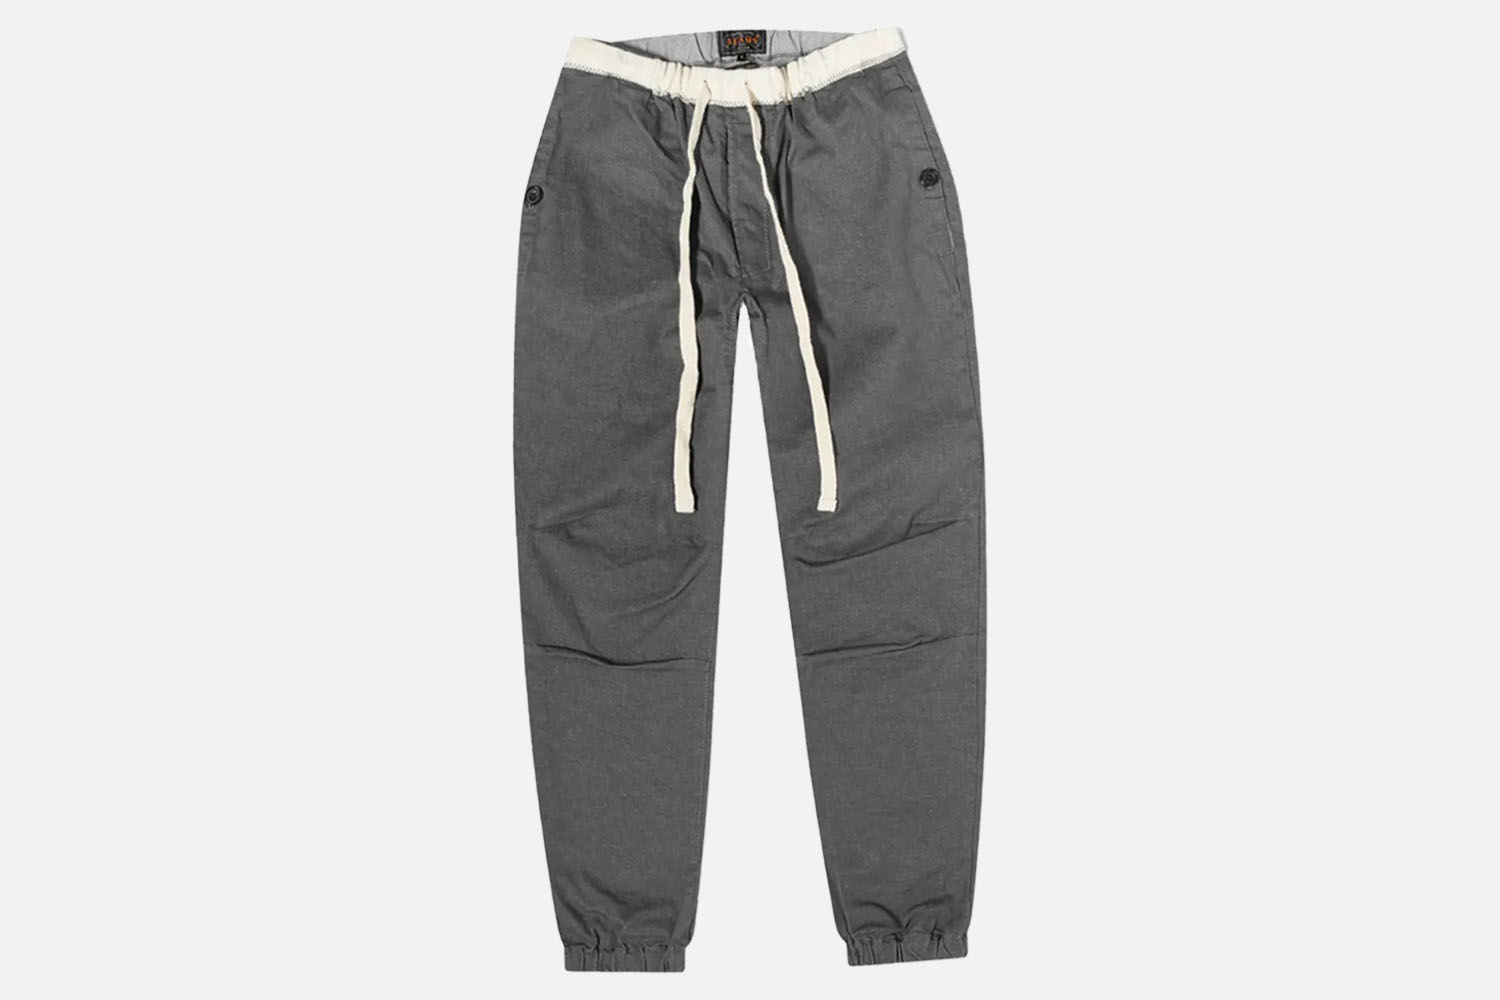 Cozy Track Pant - Soft Grey Gym Pants - Athleisure Pants